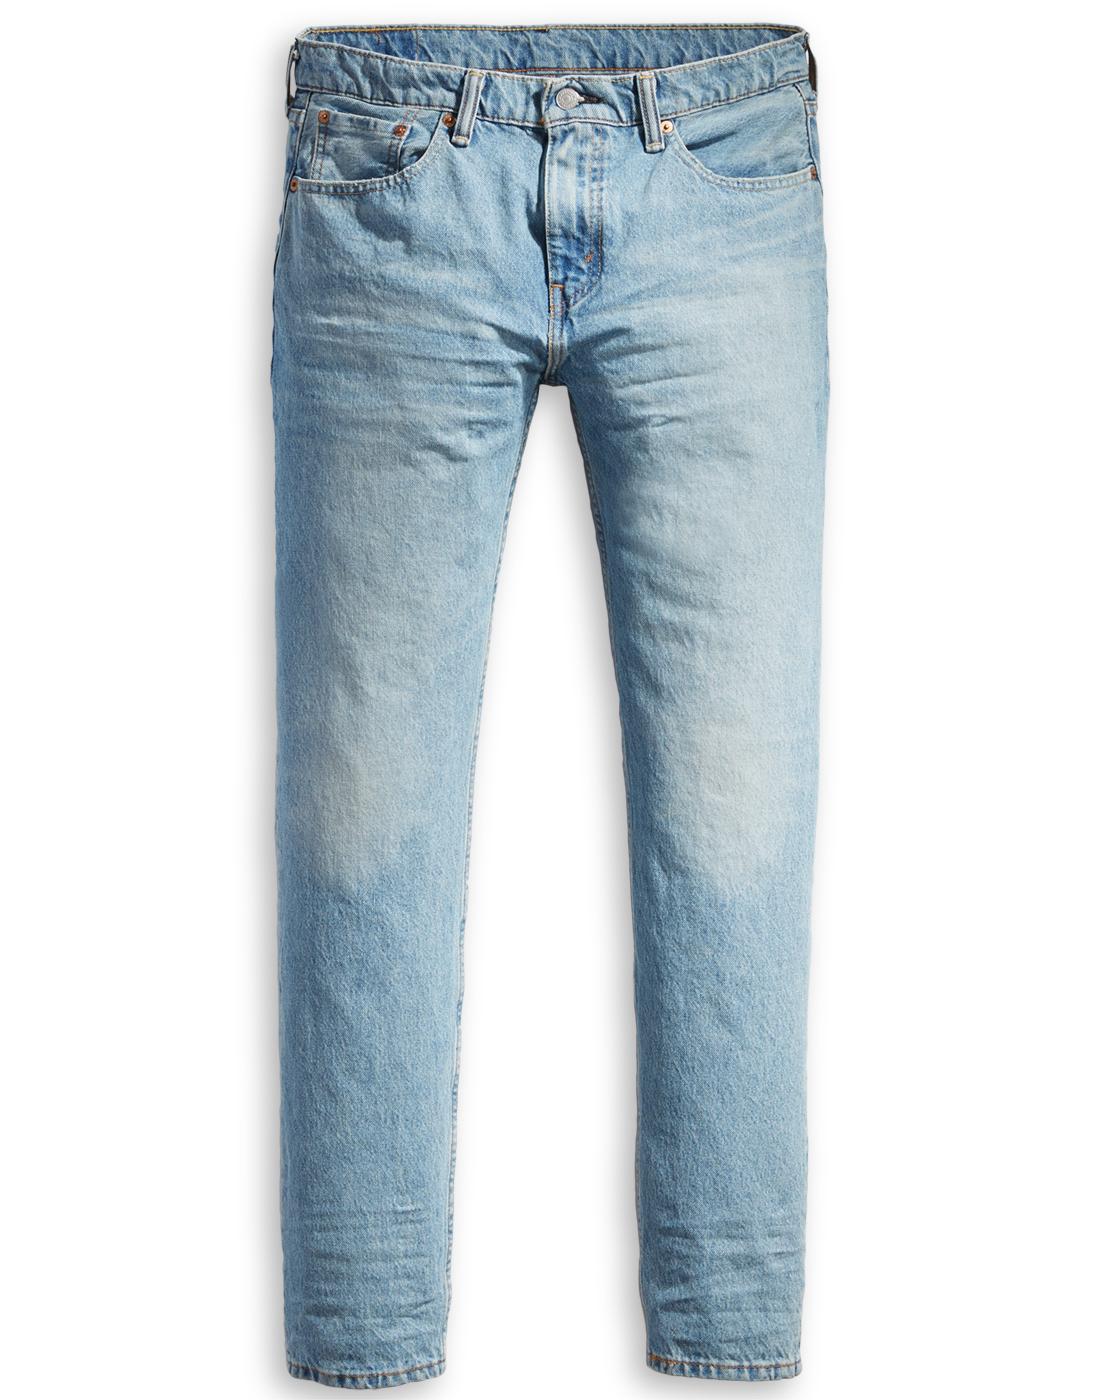 LEVI'S 502 Regular Tapered Mod Denim Jeans WITCH